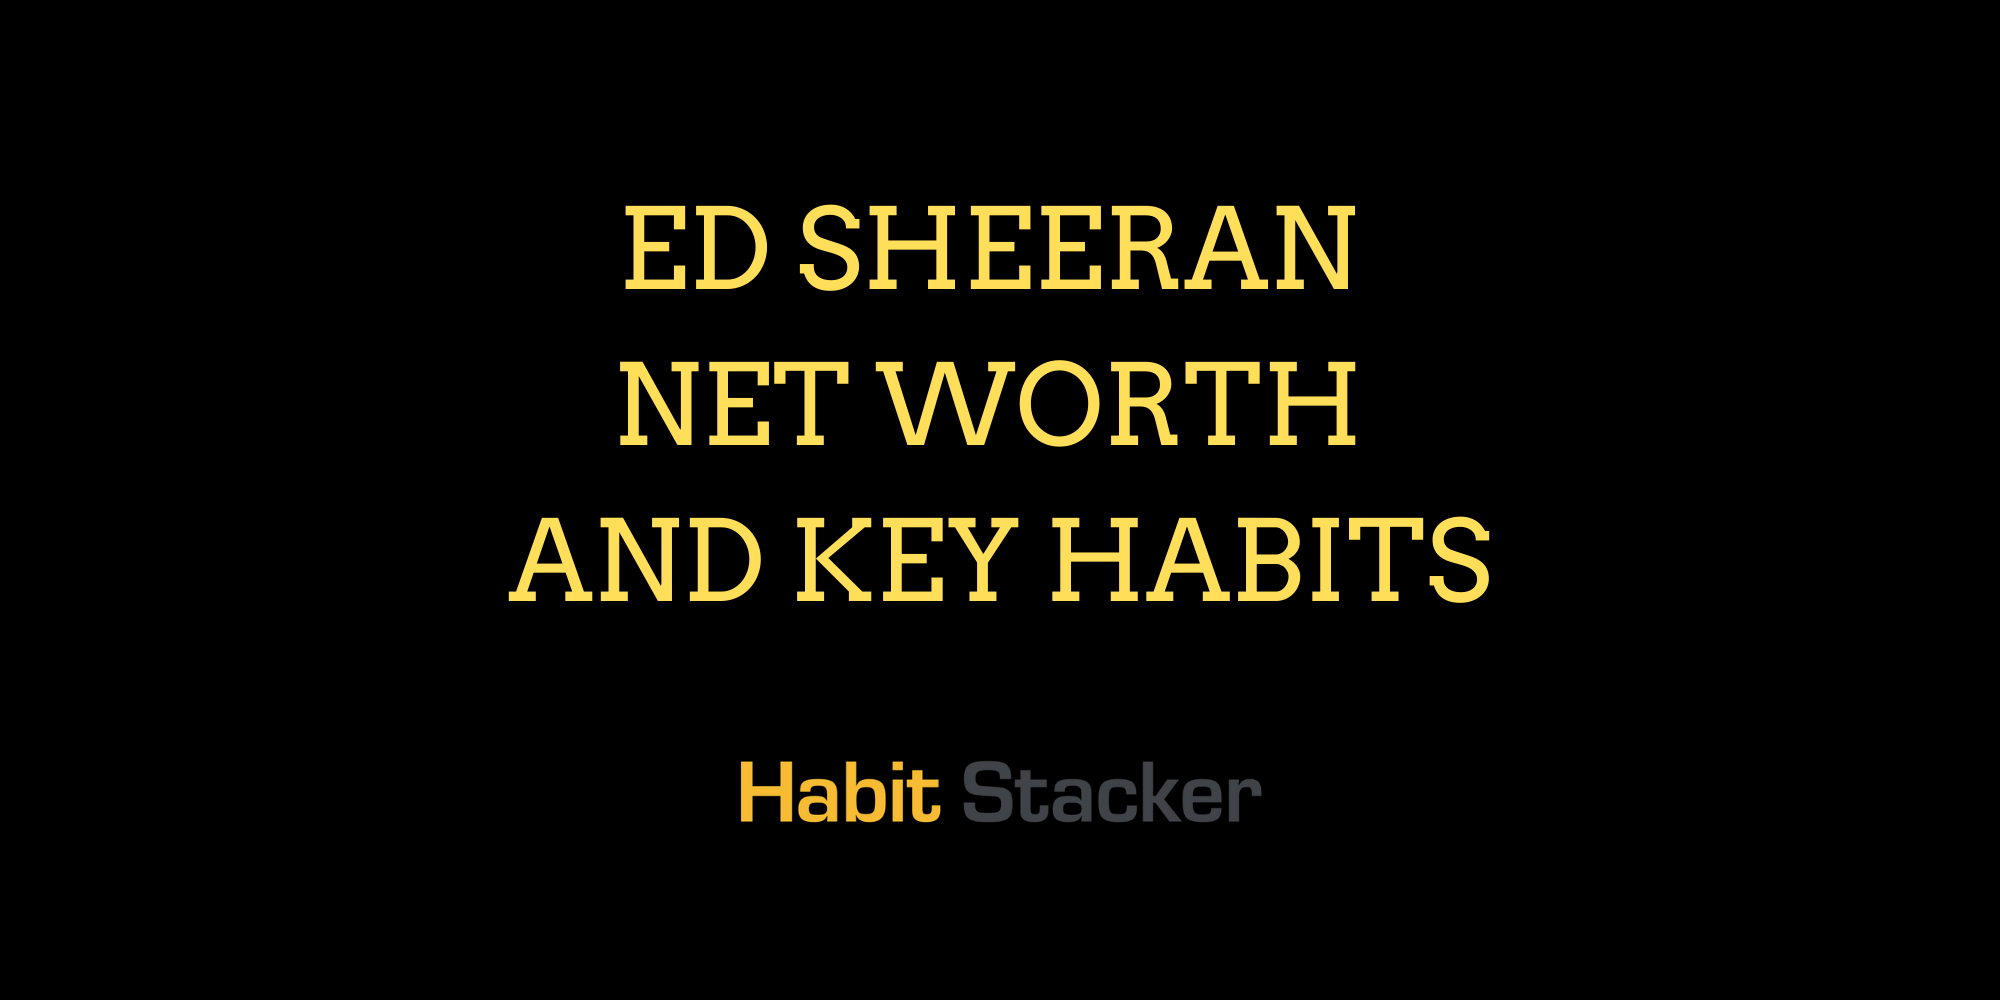 Ed Sheeran Net Worth and Key Habits